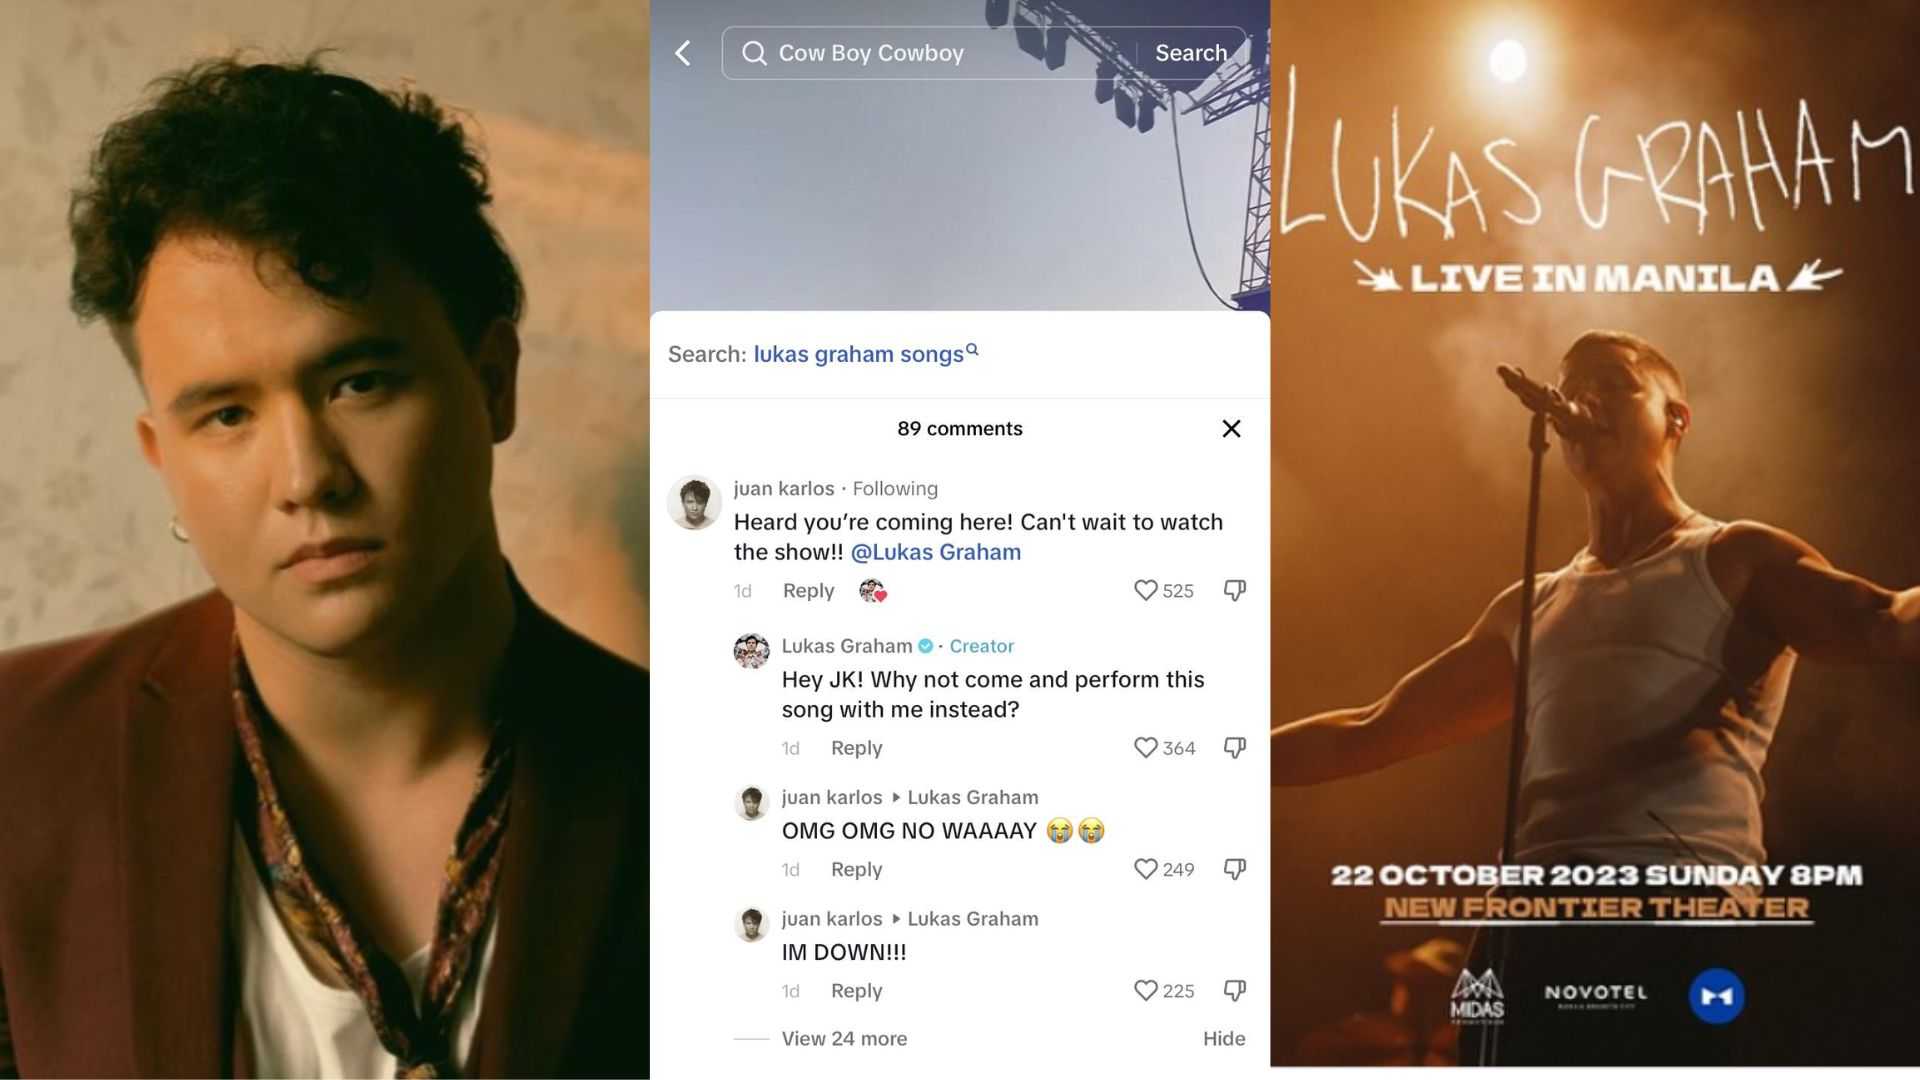 JK Labajo invited to perform at Lukas Graham’s concert in Manila